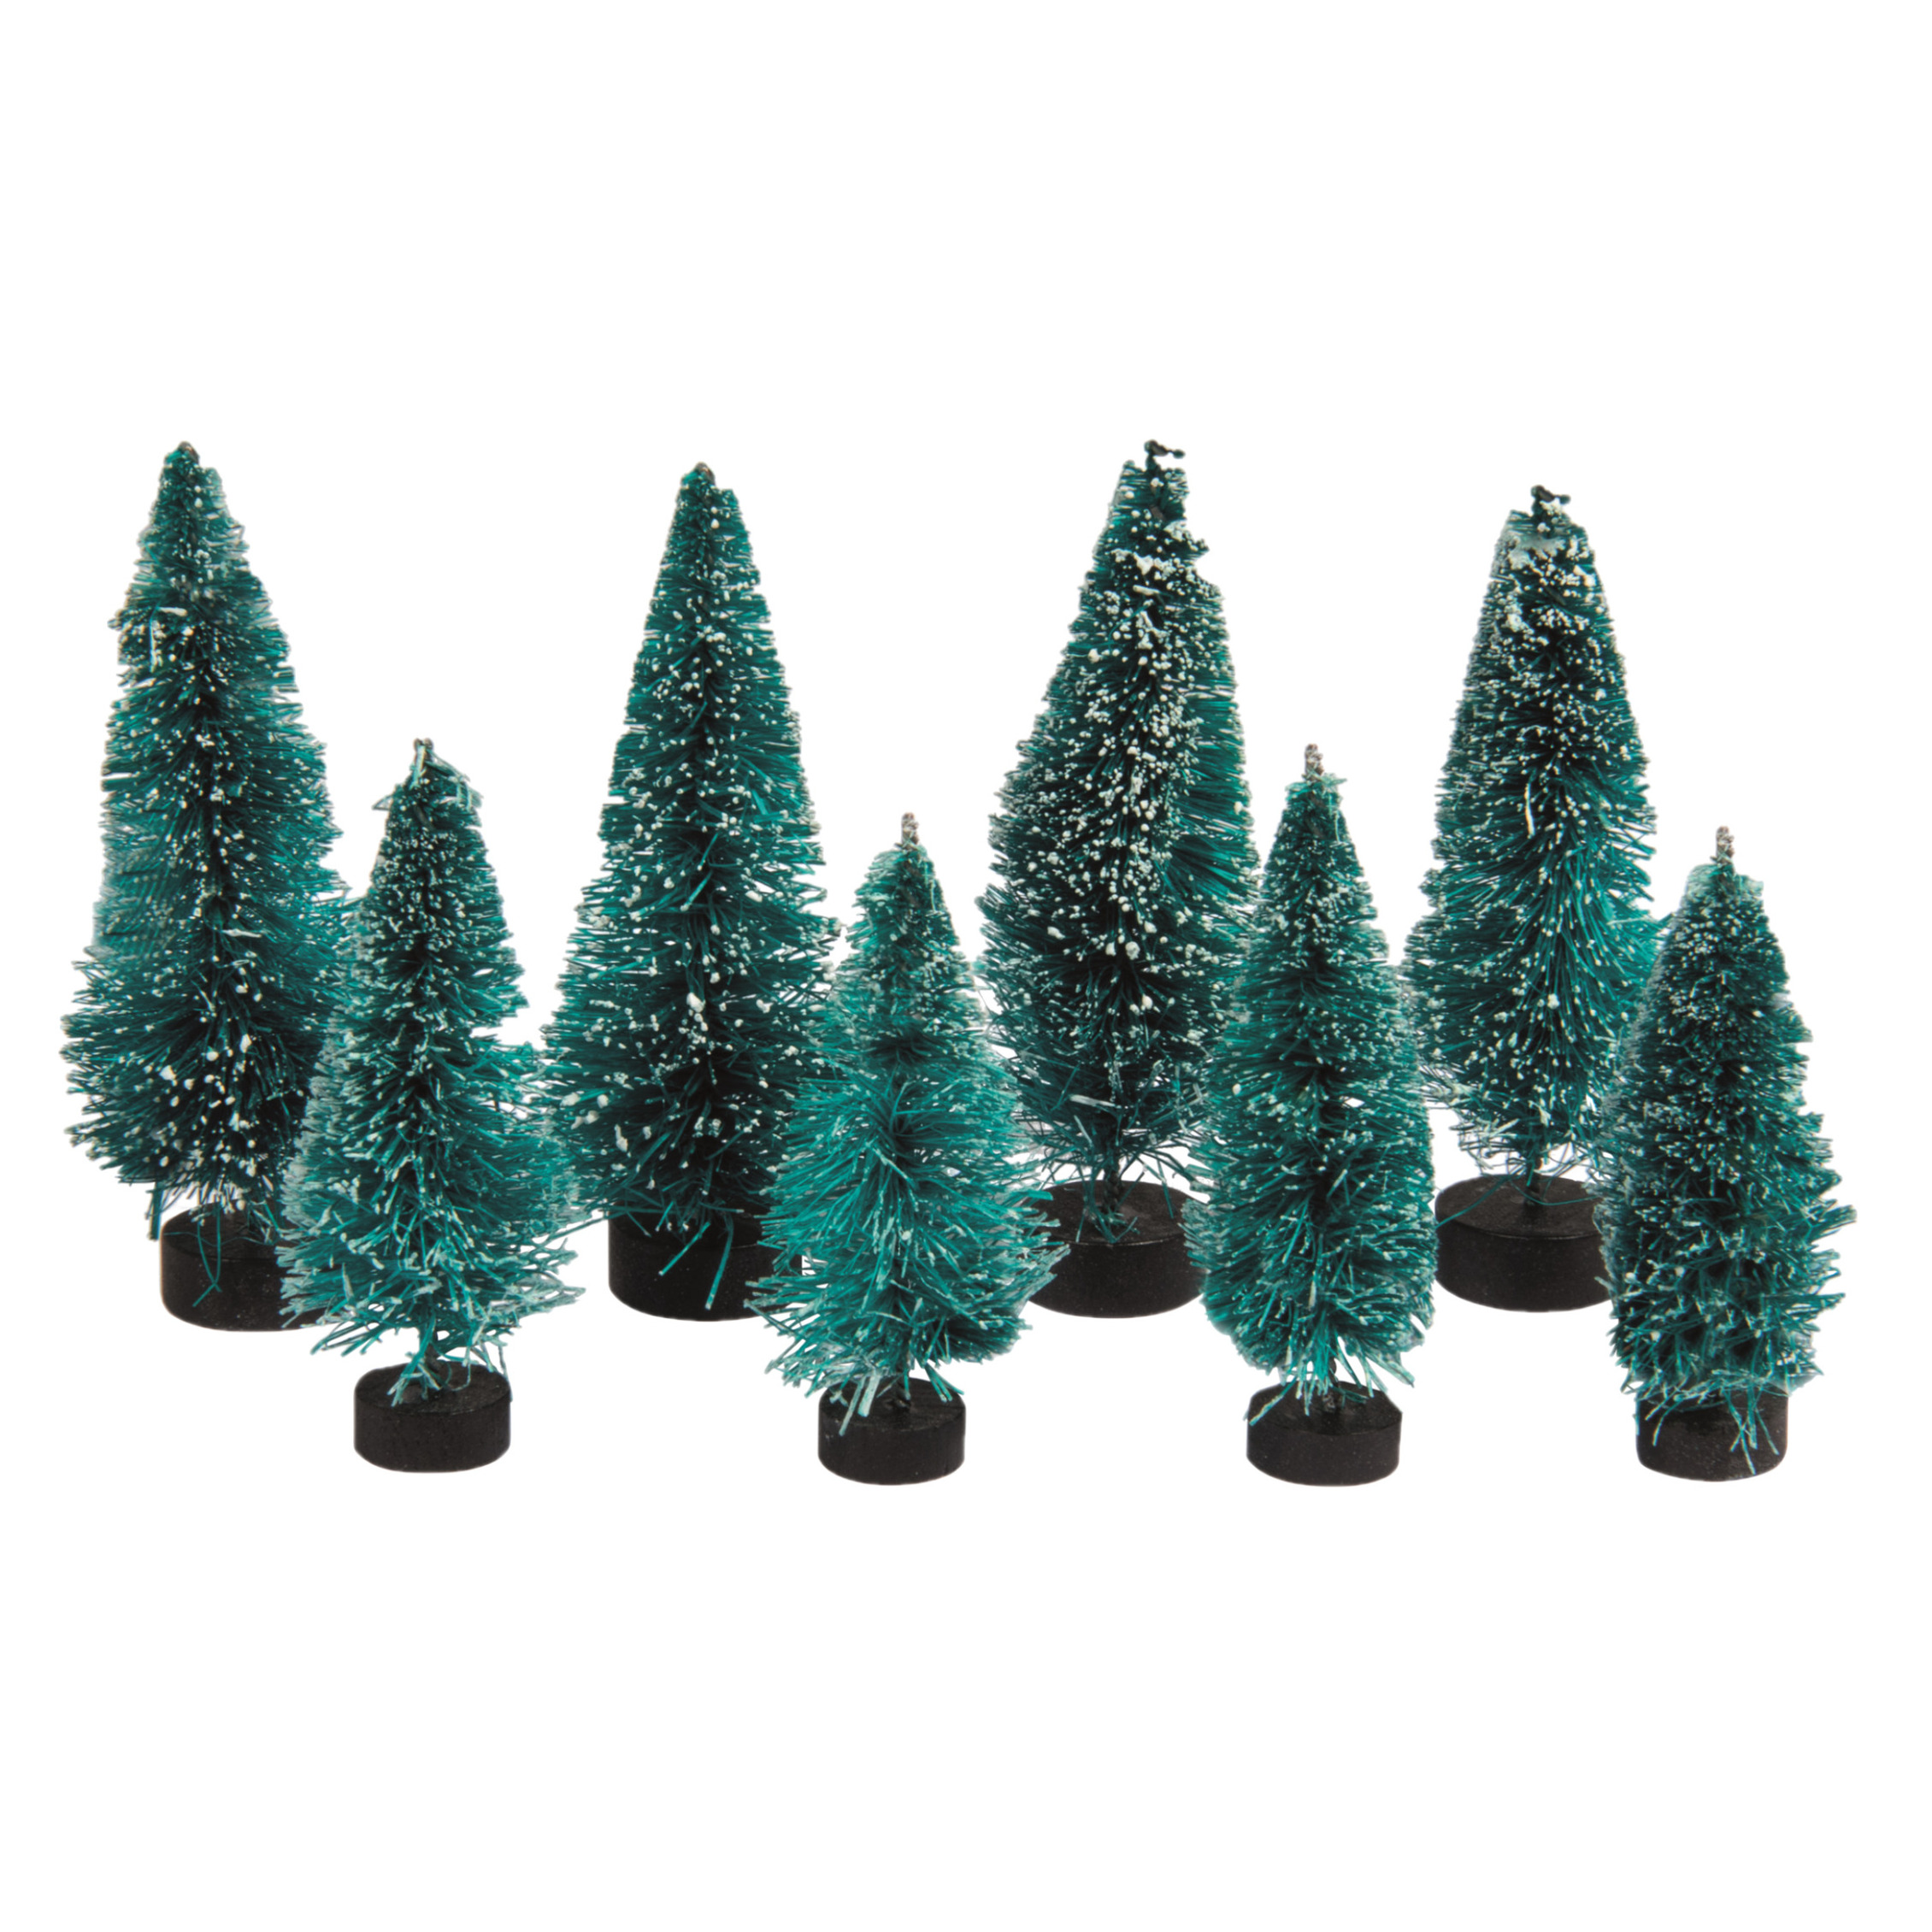 Kerstdorp boompjes-kerstboompjes 8x st 5 en 7 cm -miniatuur kerstdorp accessoires